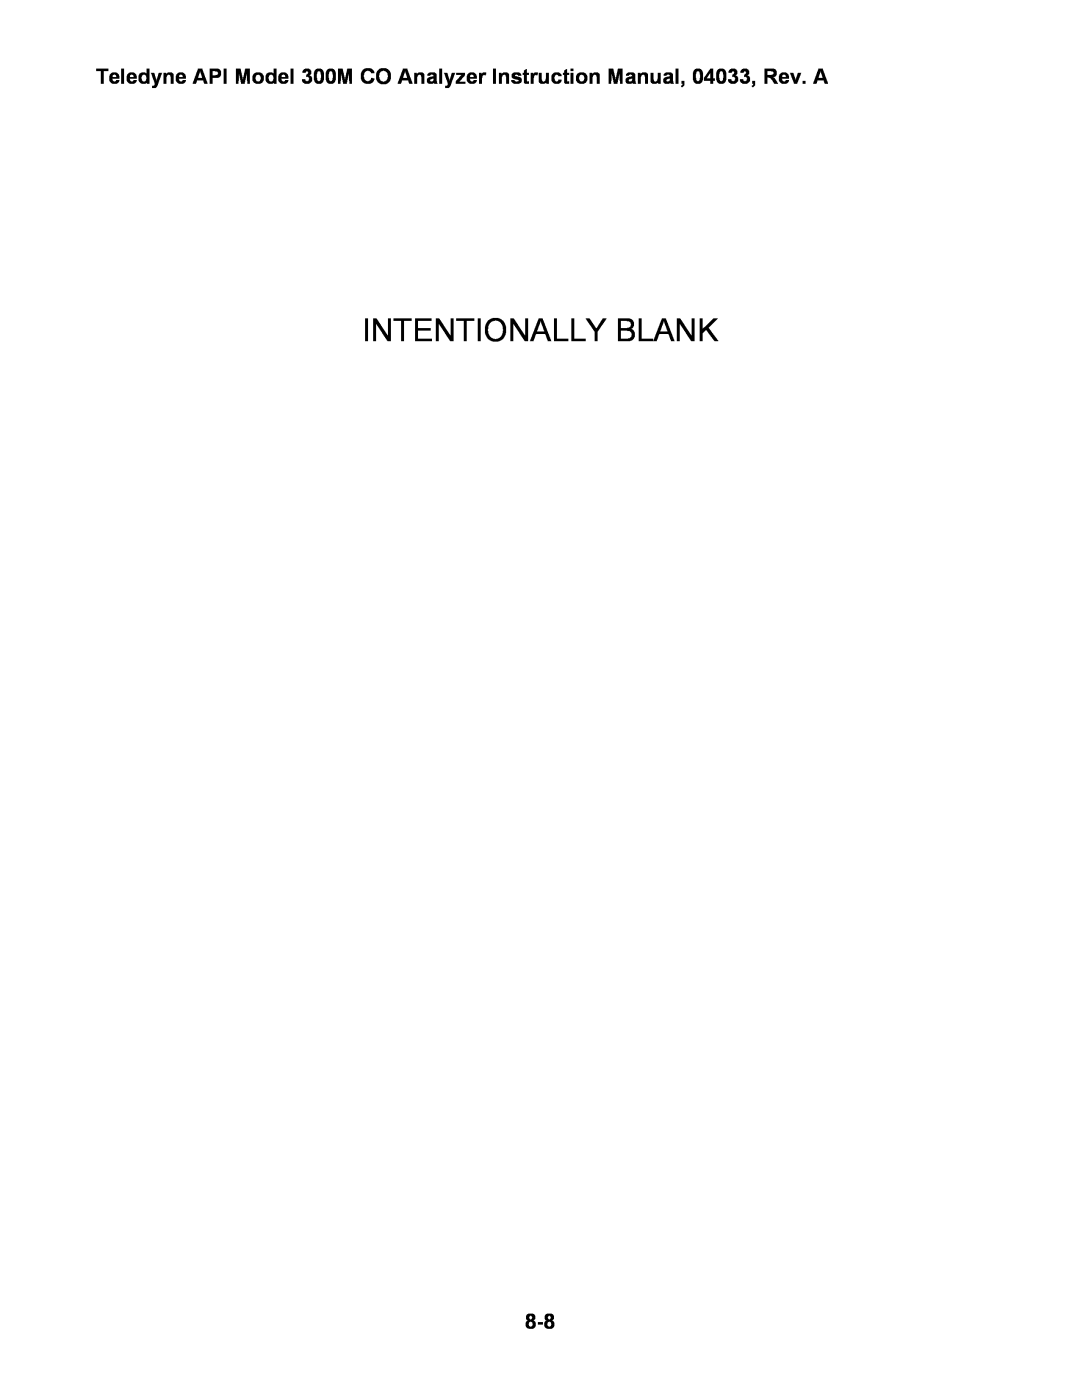 Teledyne 300M instruction manual Intentionally Blank 